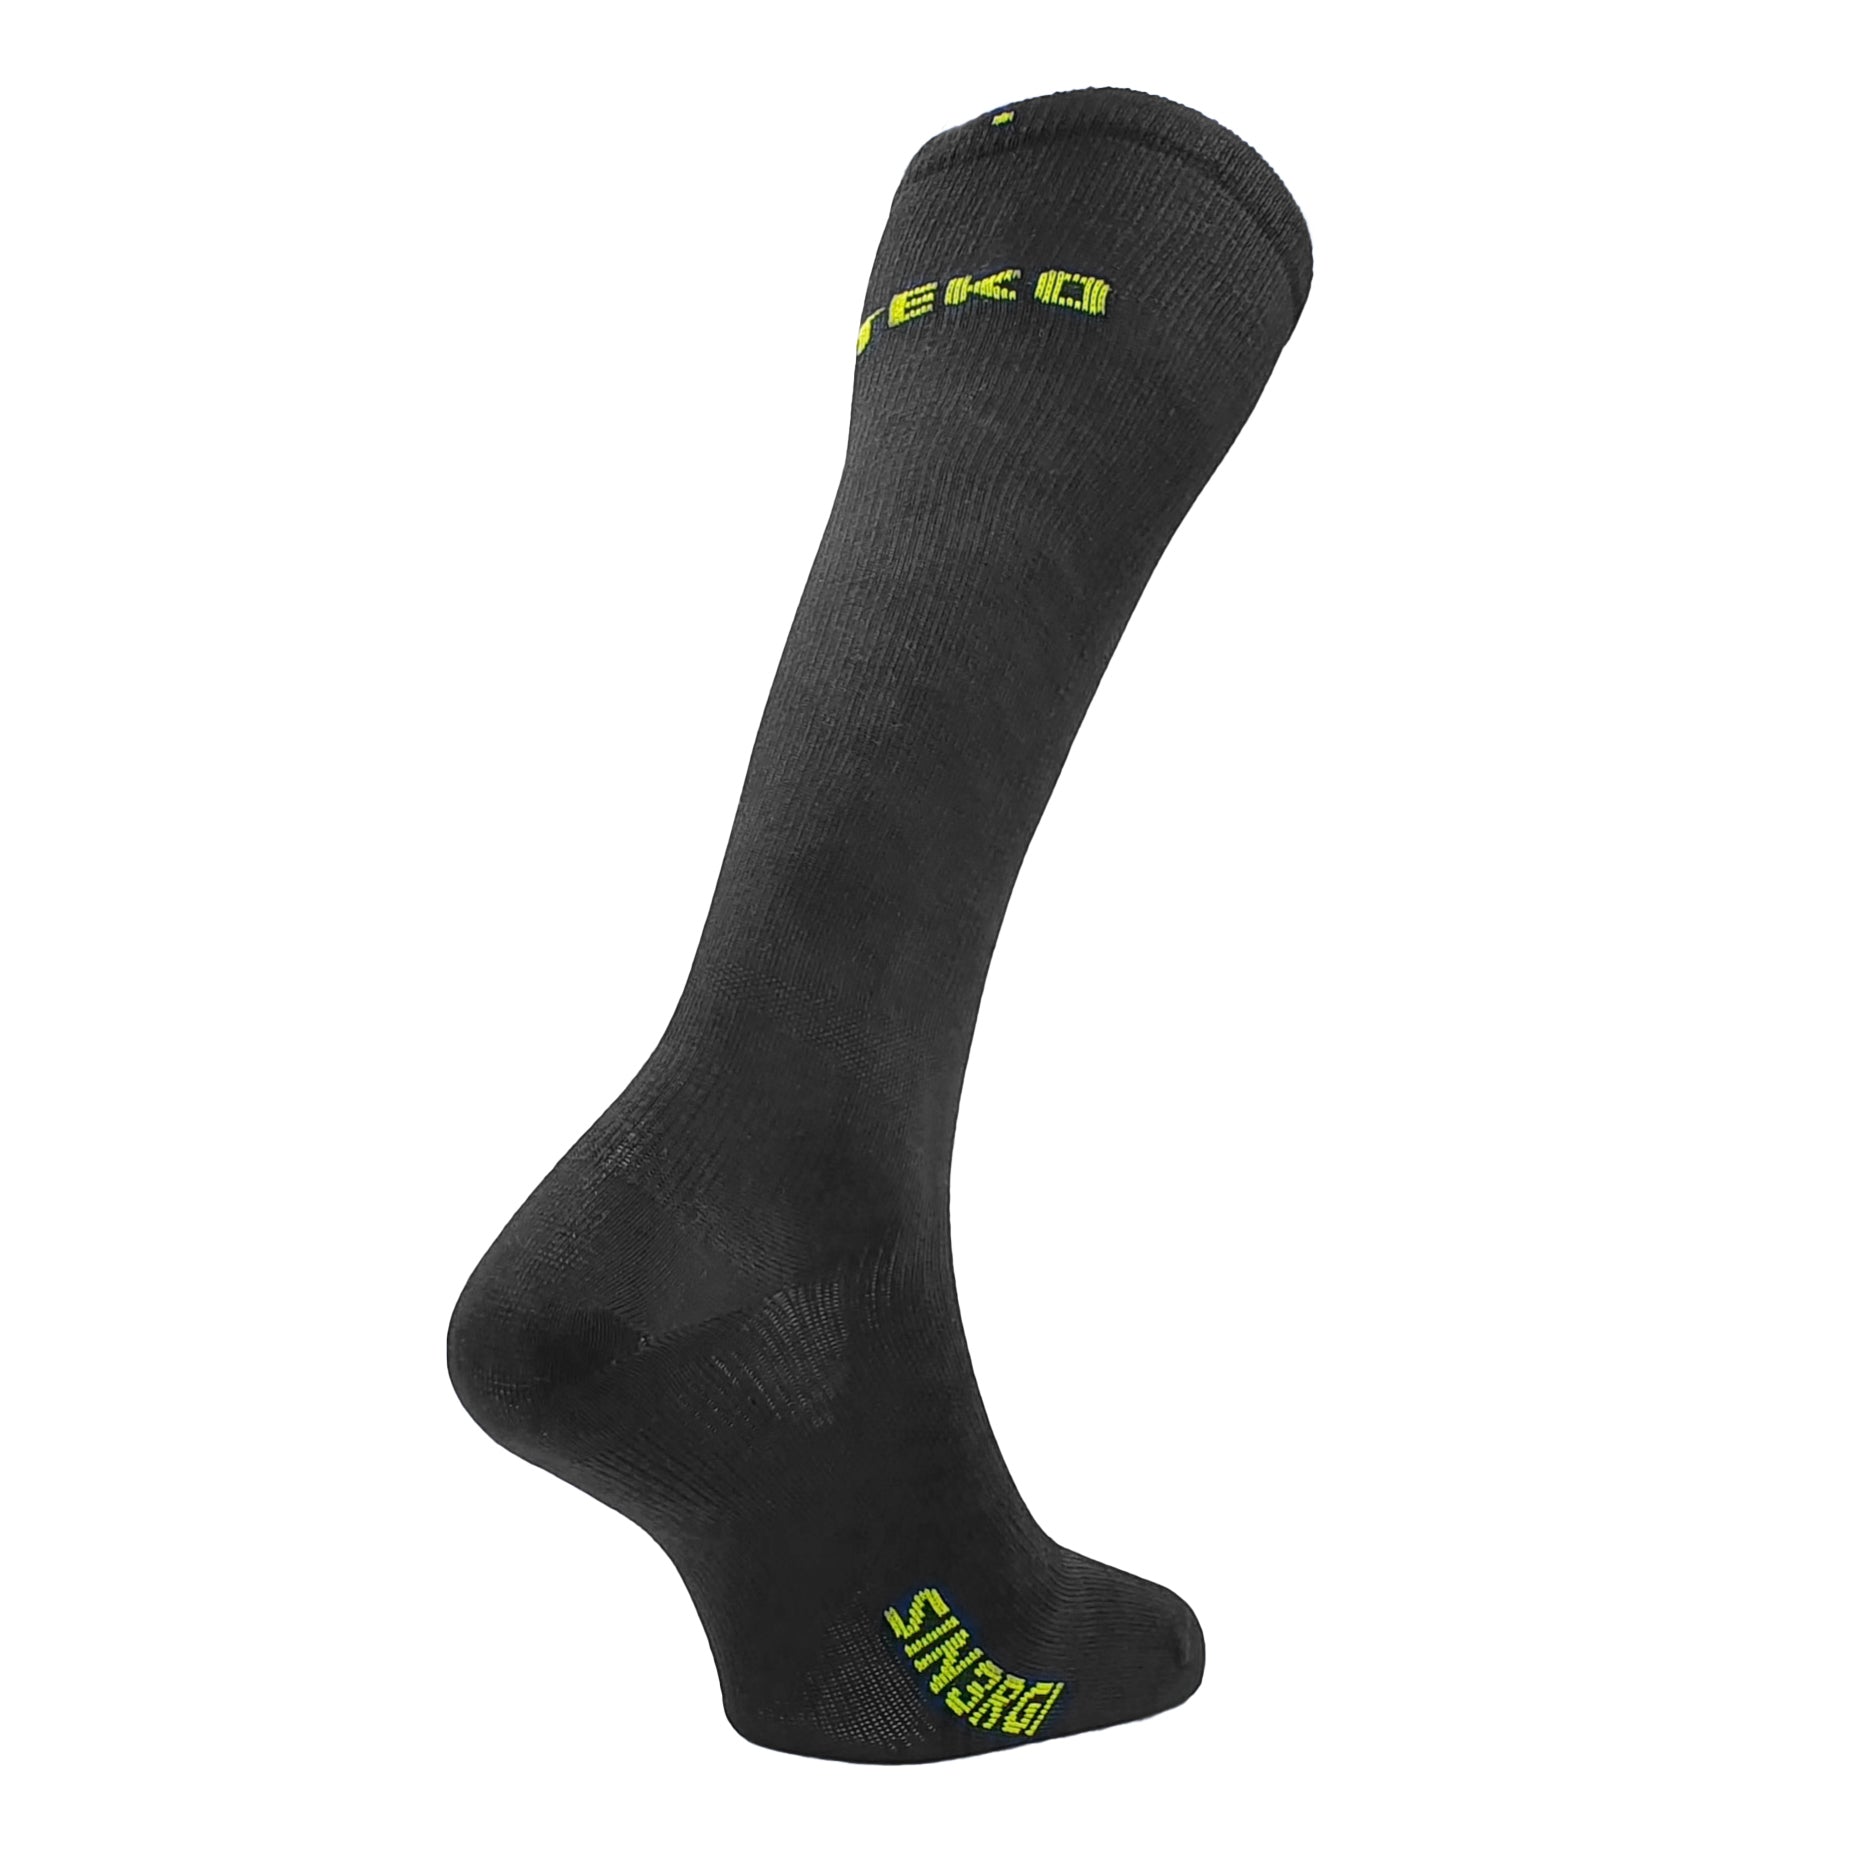 Race Sport Socks Ski Socks Snowboard Socks Cushion Knee High Socks - MM- Socks - Wundersocks